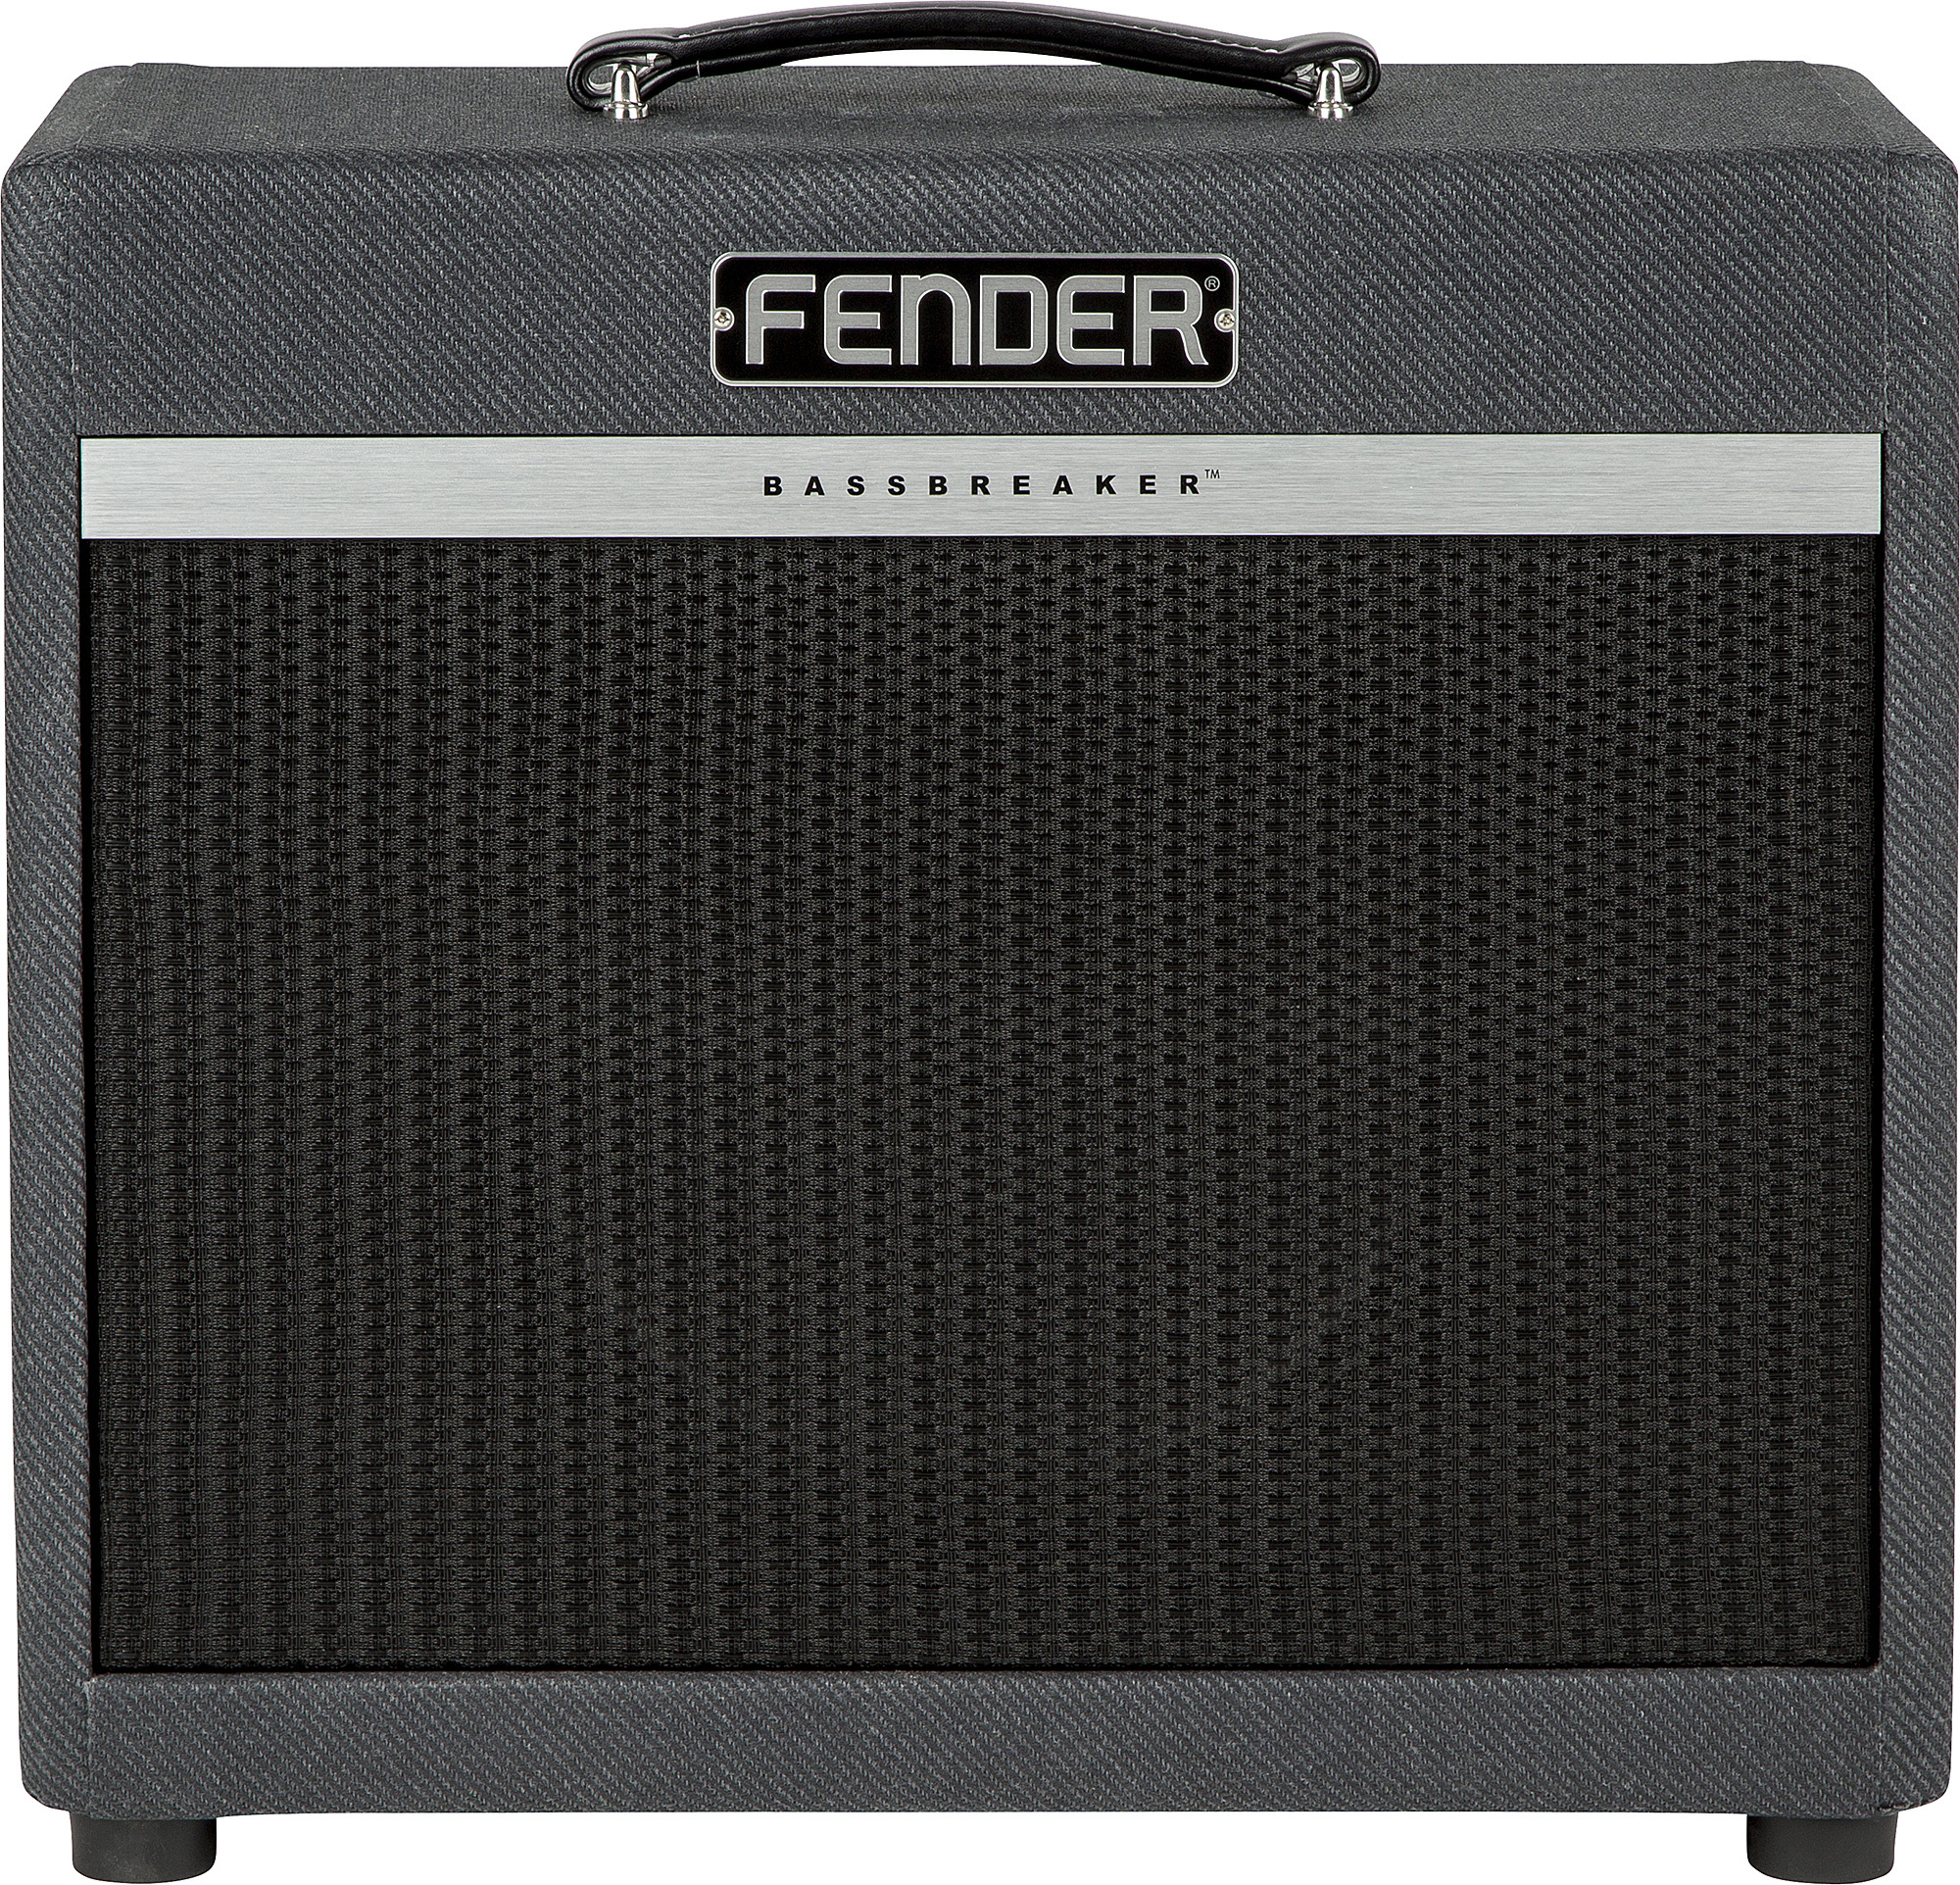 Fender Bassbreaker Bb-112 Enclosure 1x12 70w 8 Ohms Gray Tweed - Cabina amplificador para guitarra eléctrica - Main picture